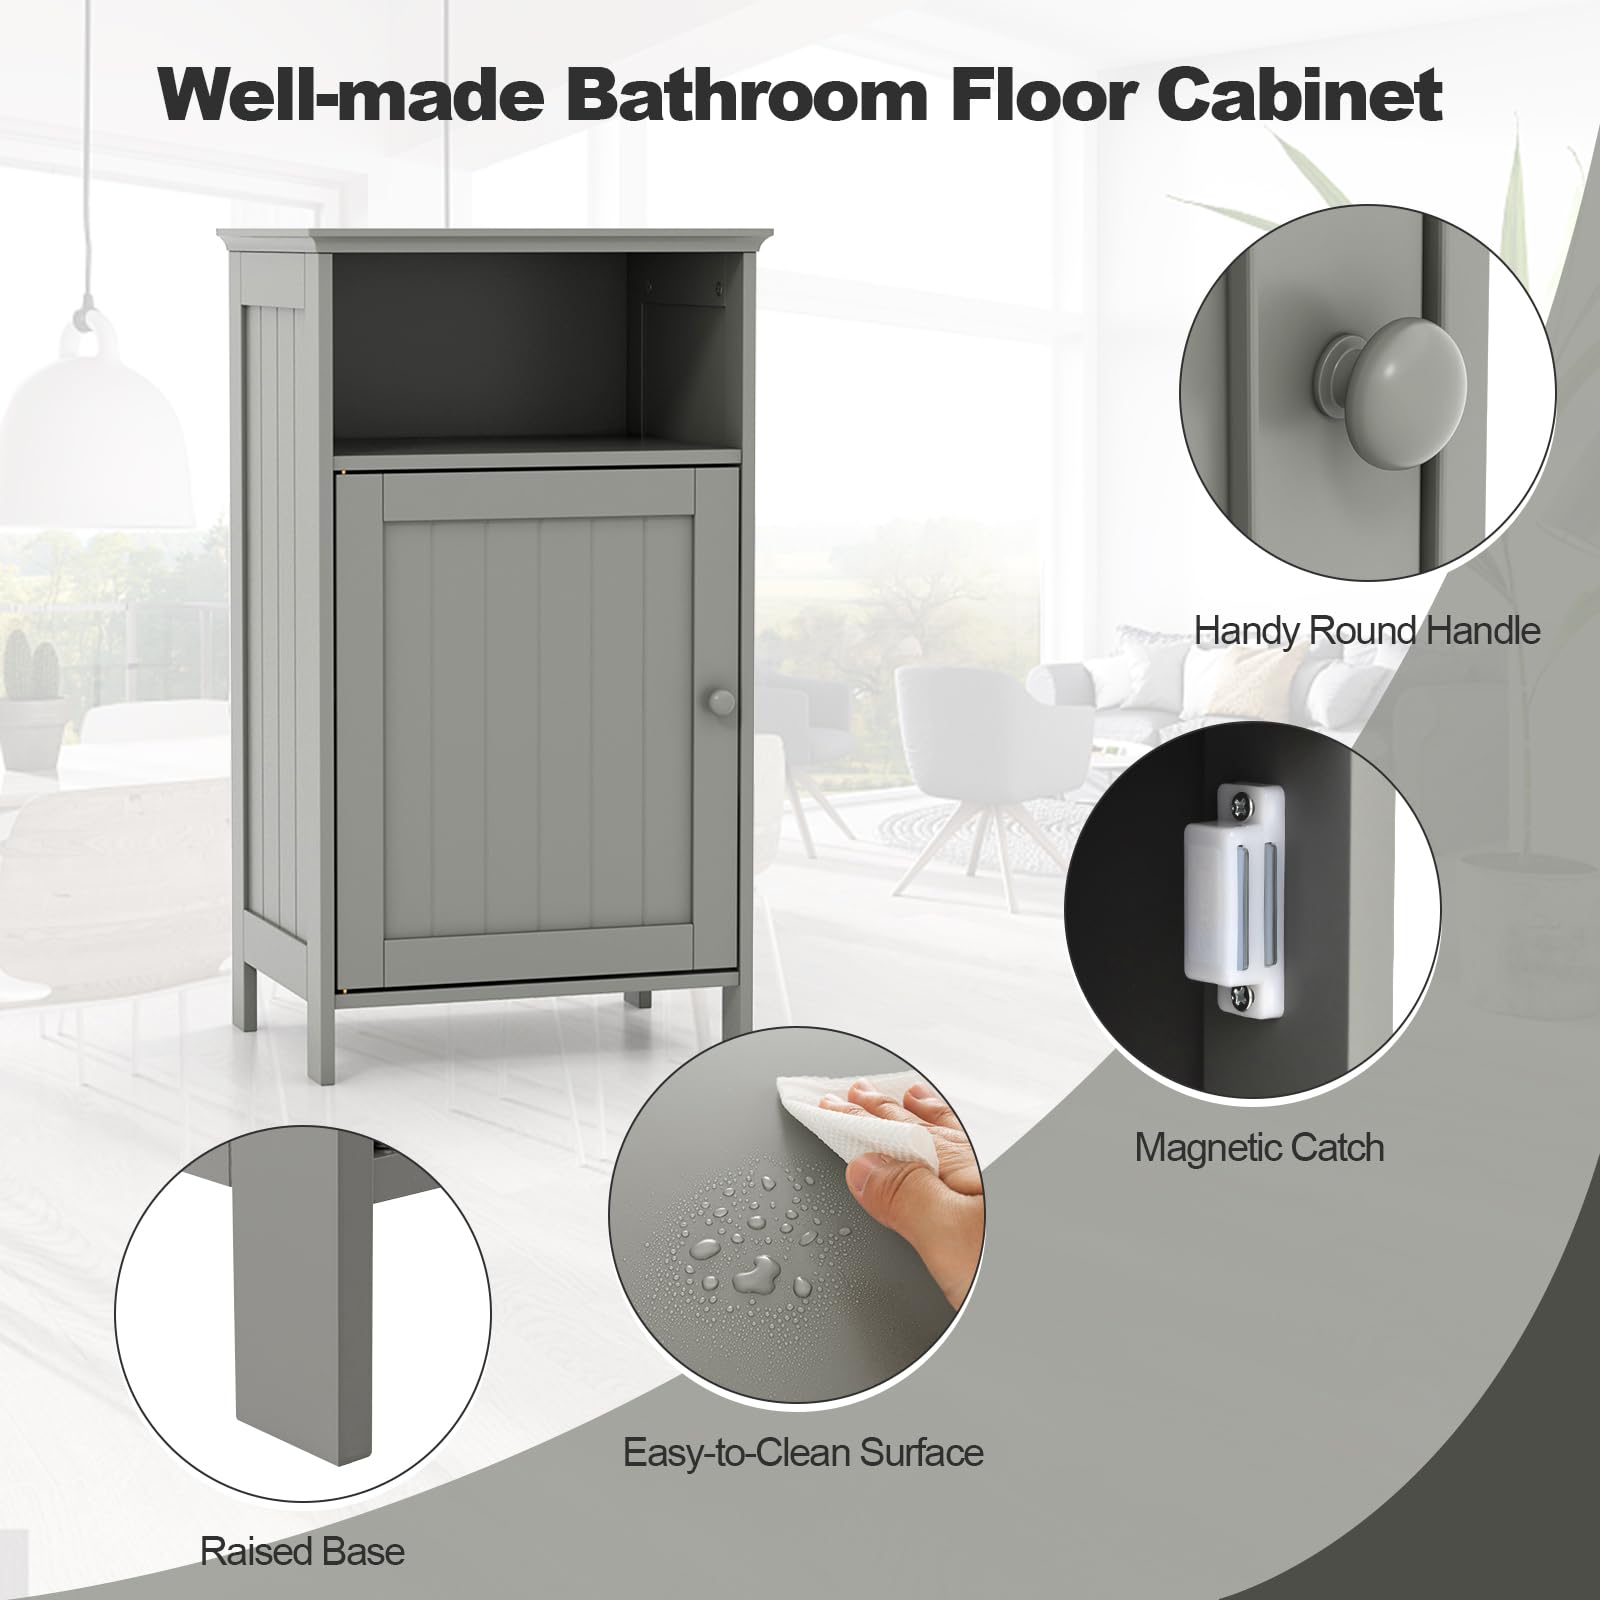 Giantex Bathroom Floor Storage Cabinet - Side Cabinet with Open Compartment, 3-Position Adjustable Shelf